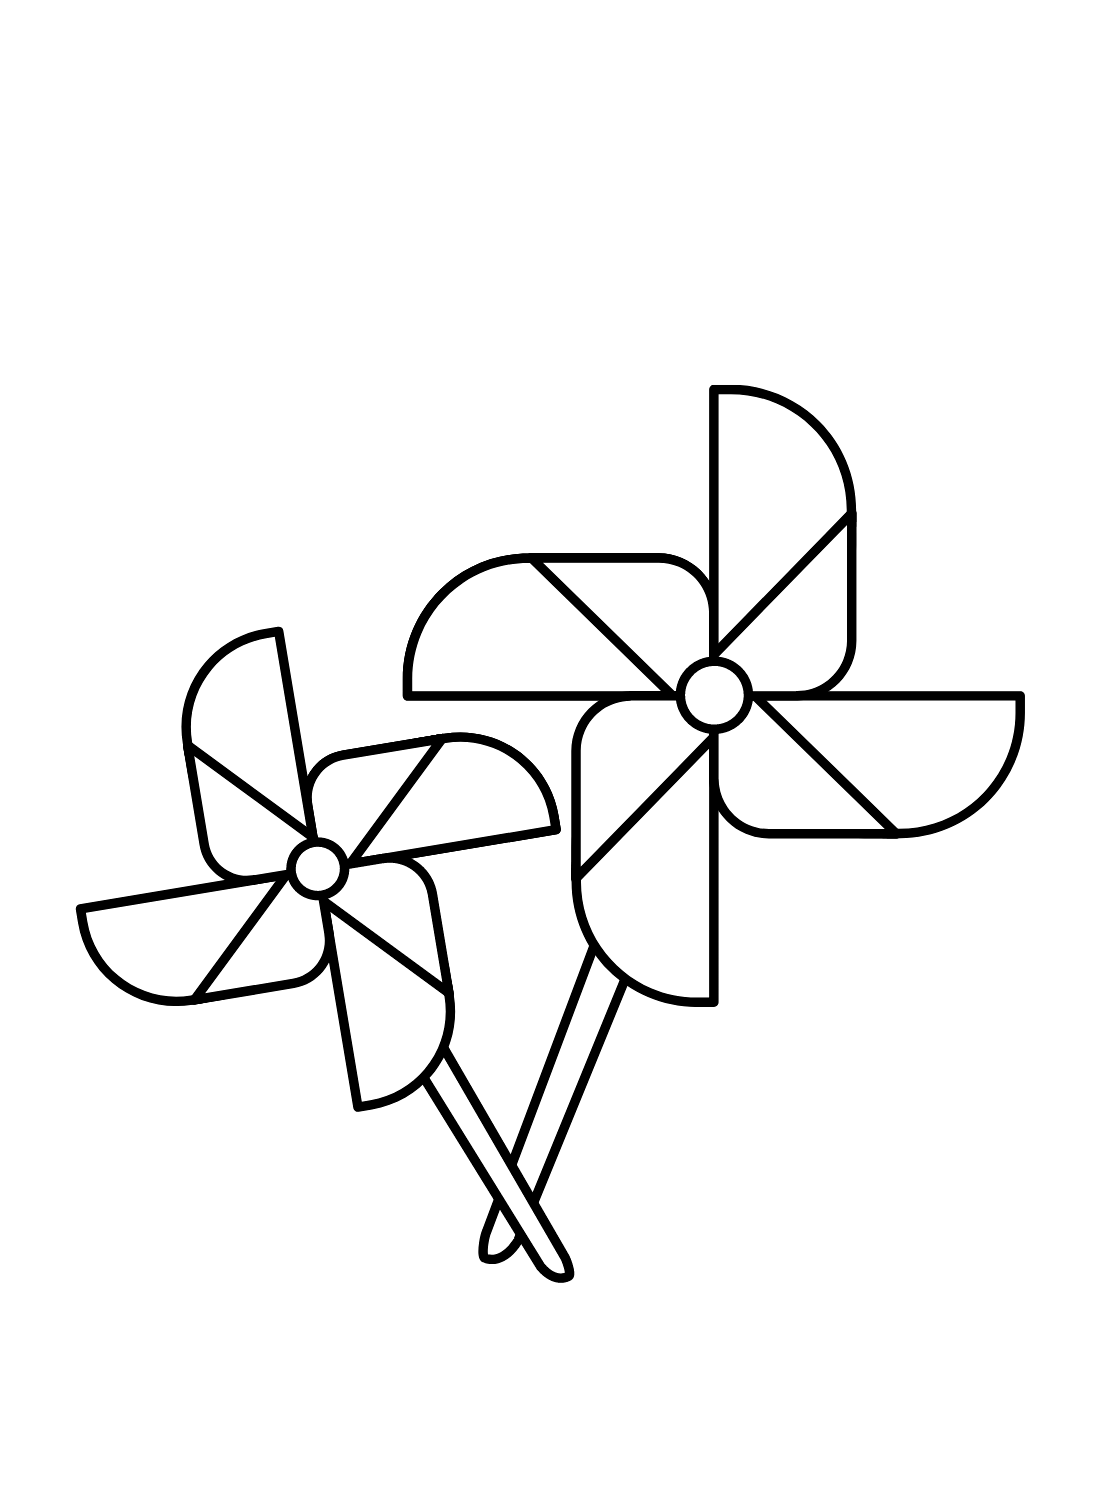 Two Pinwheels Coloring Page